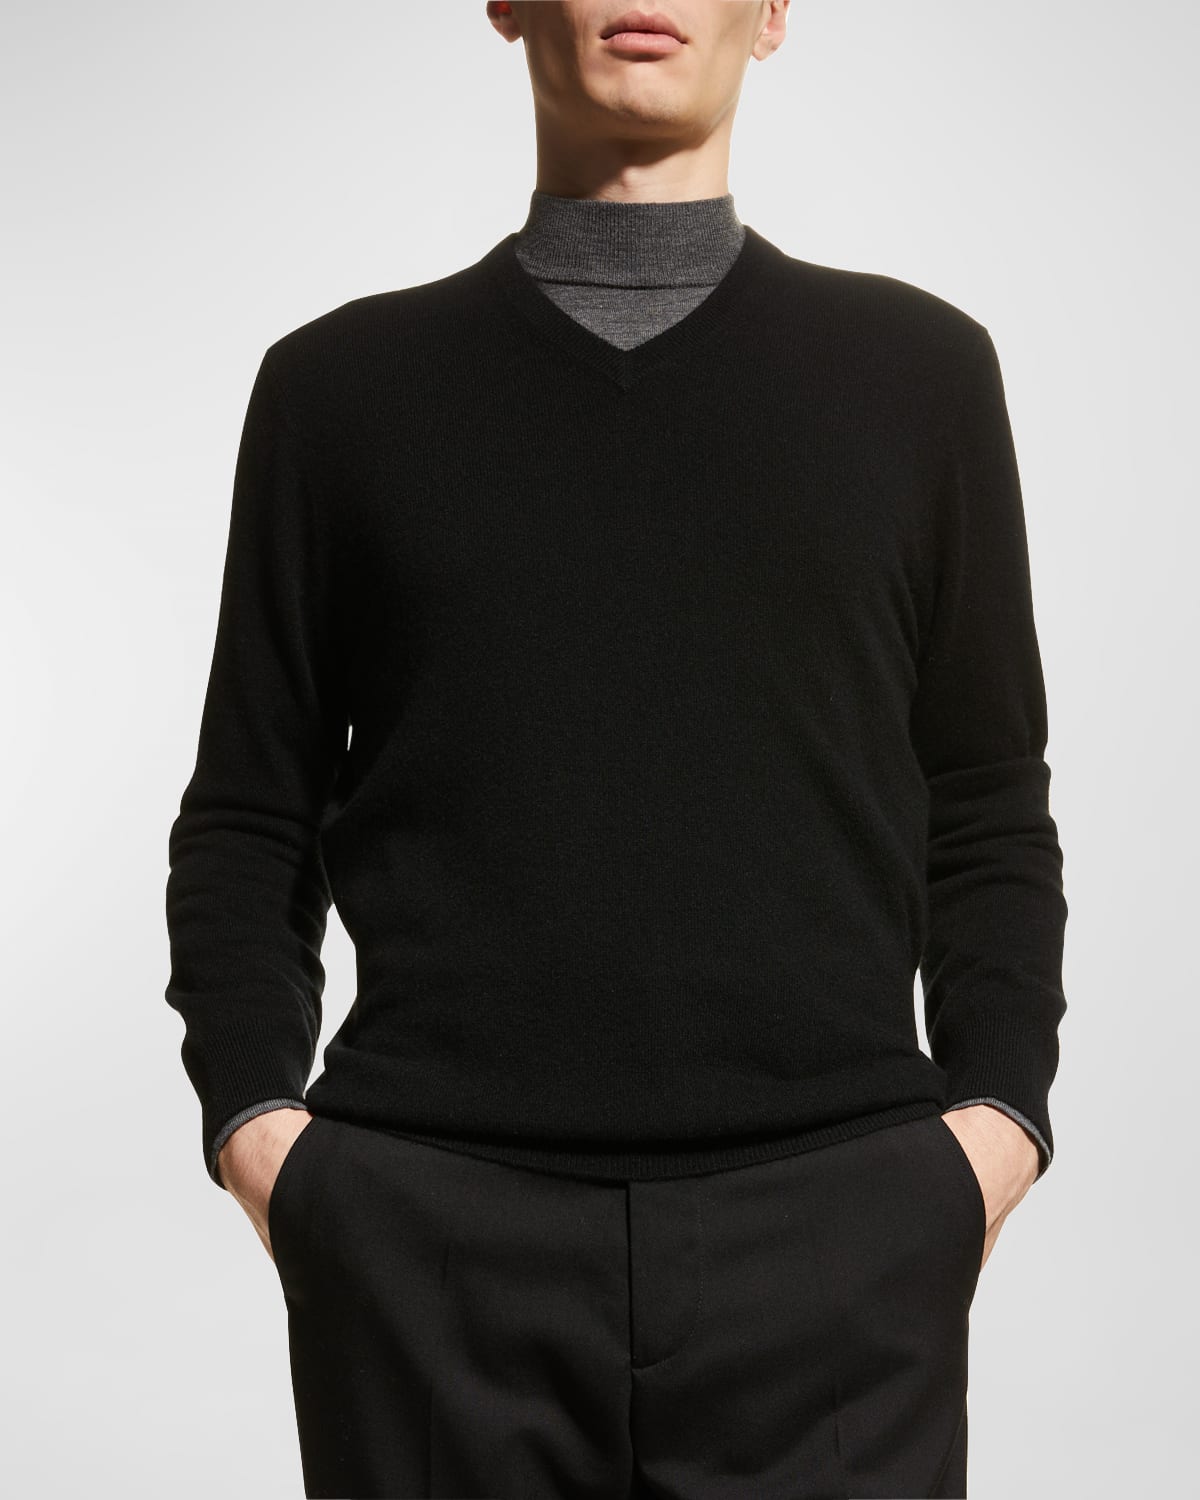 Neiman Marcus Cashmere Collection Men's Cashmere V-Neck Sweater ...